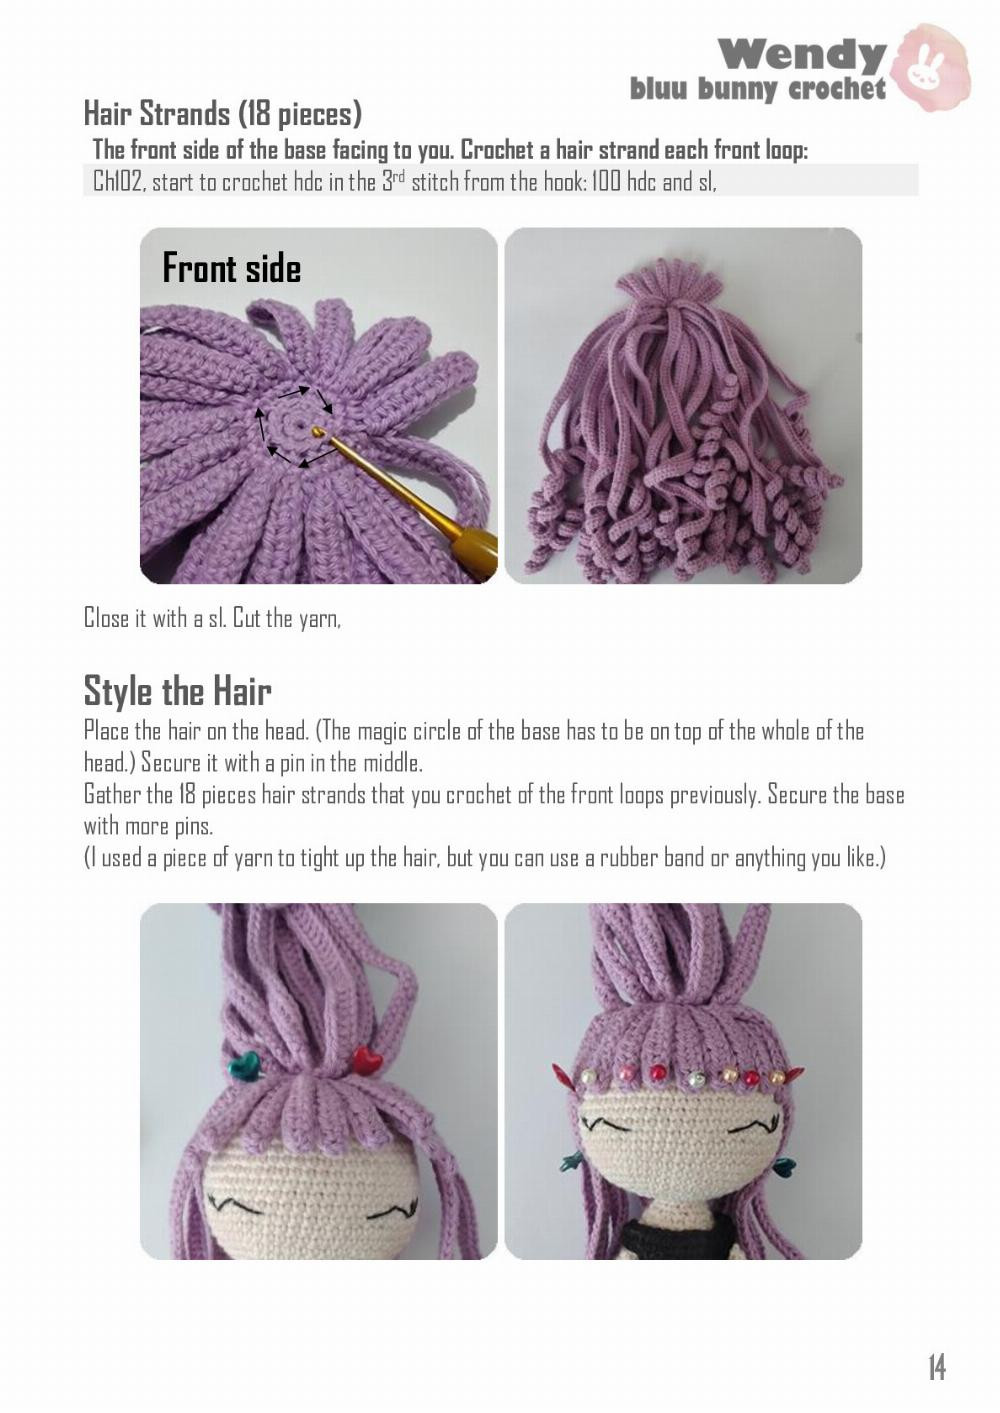 Witch crochet pattern wearing hat and black dress, purple hair,